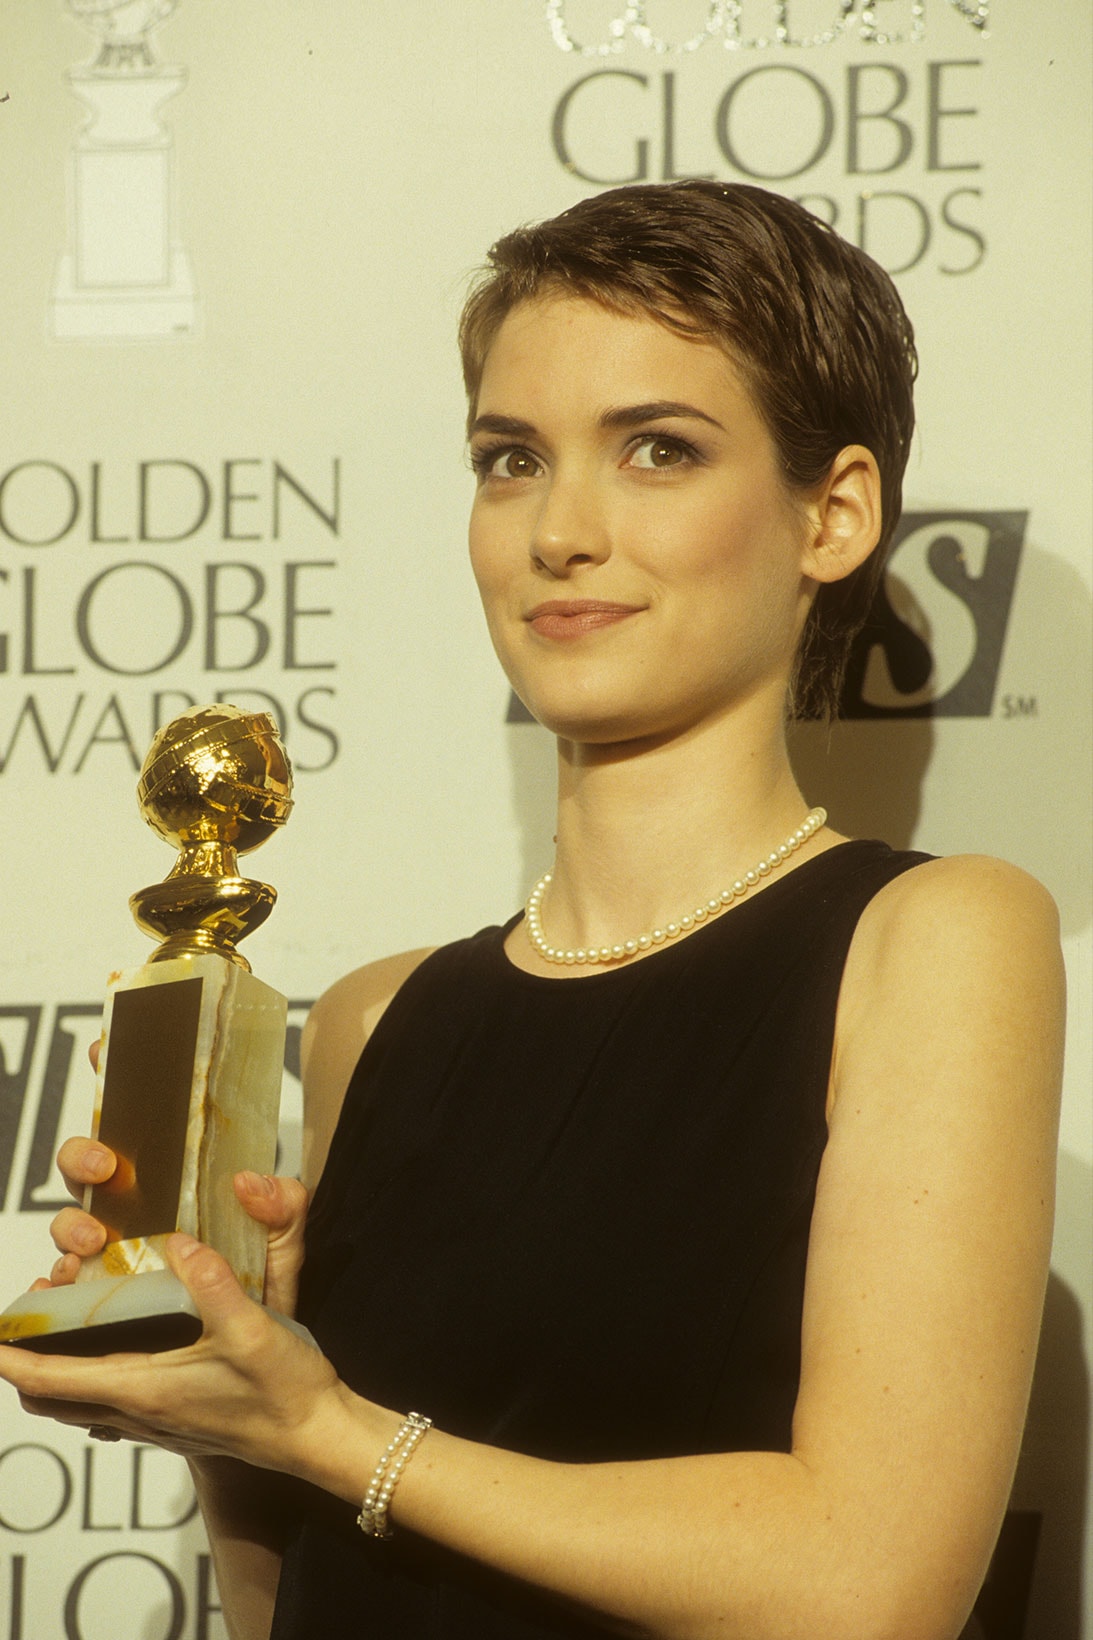 golden globes awards best most iconic looks dresses red carpet celebrity style beyonce julia roberts sarah jessica parker sjp